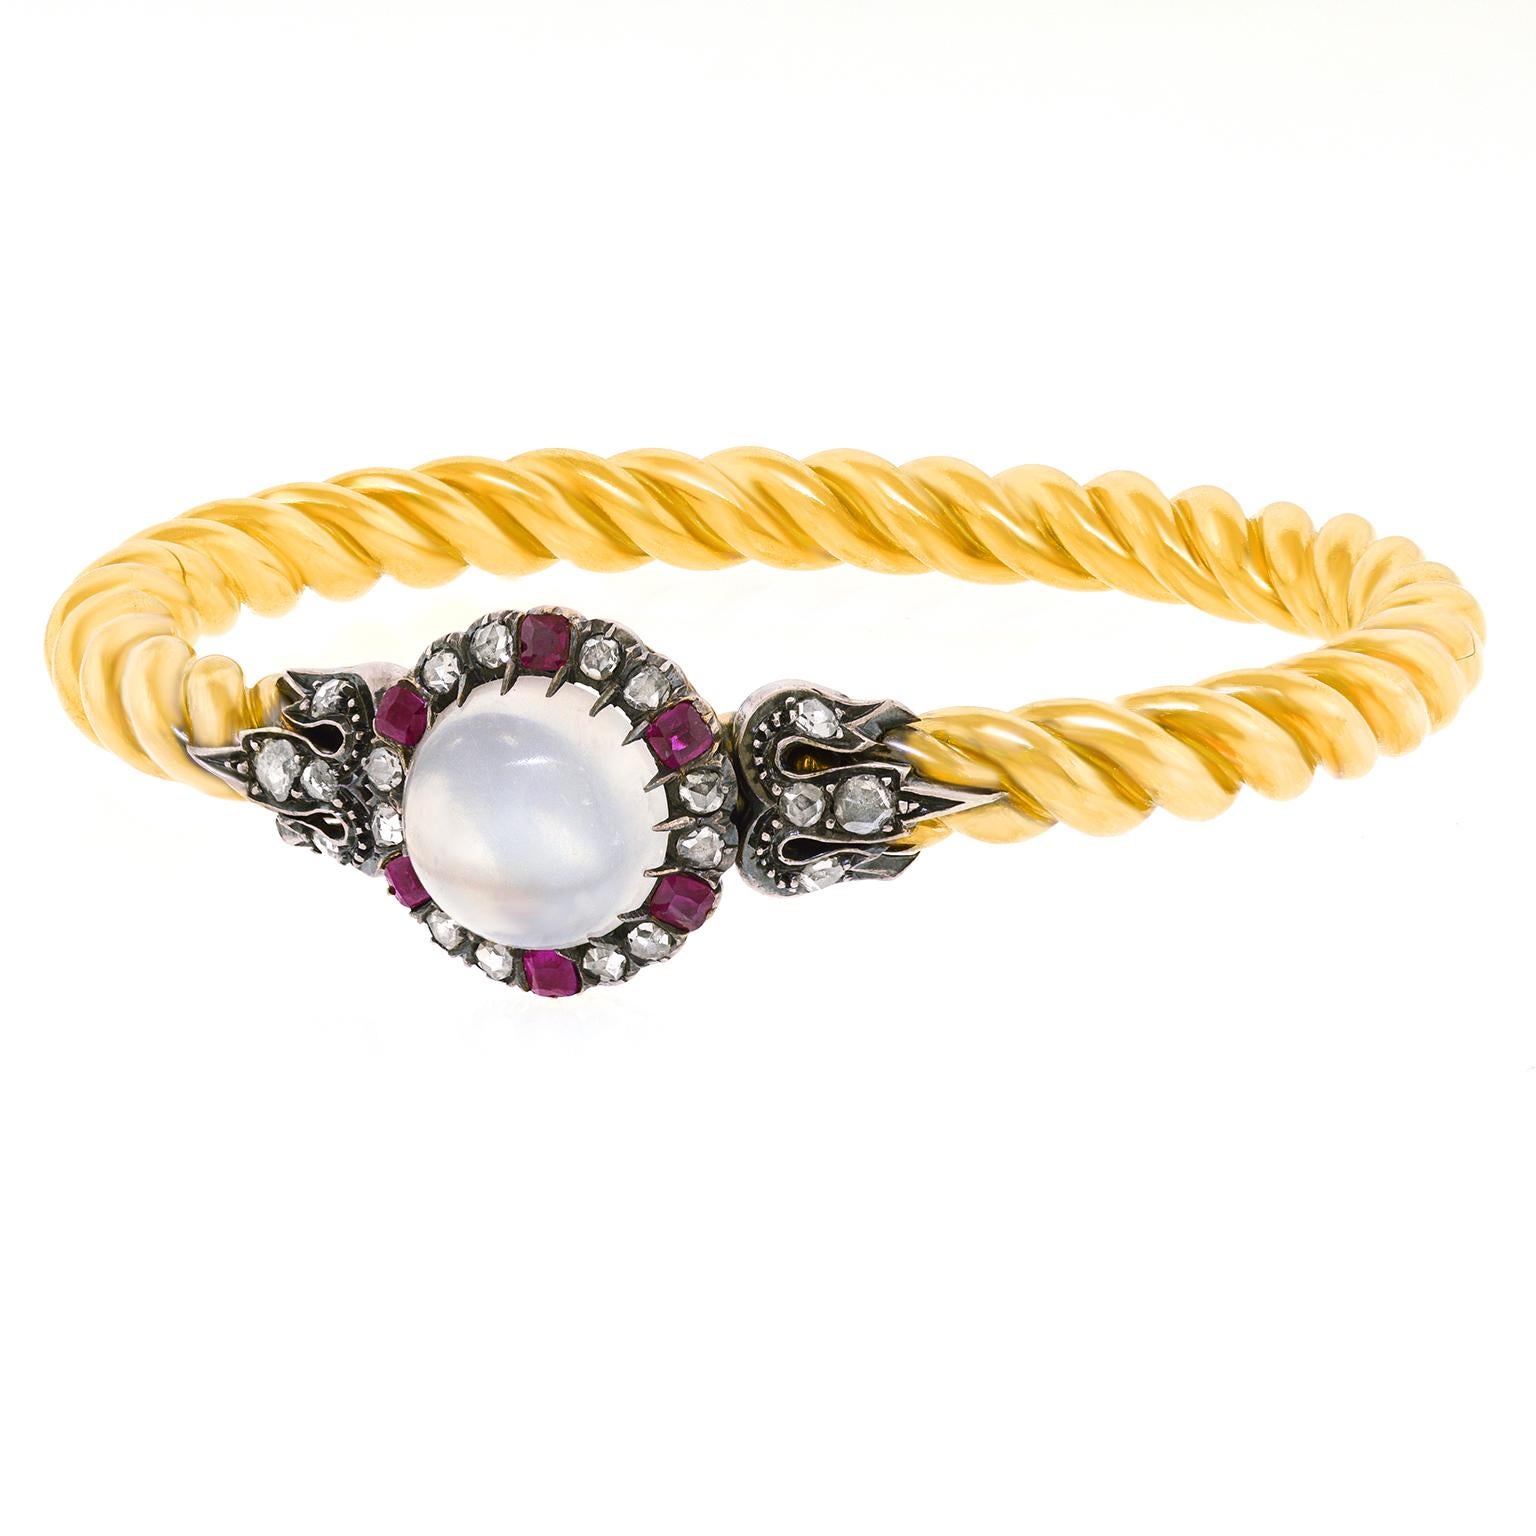 Moonstone, Ruby and Diamond Bracelet 18k c1870s France For Sale 4